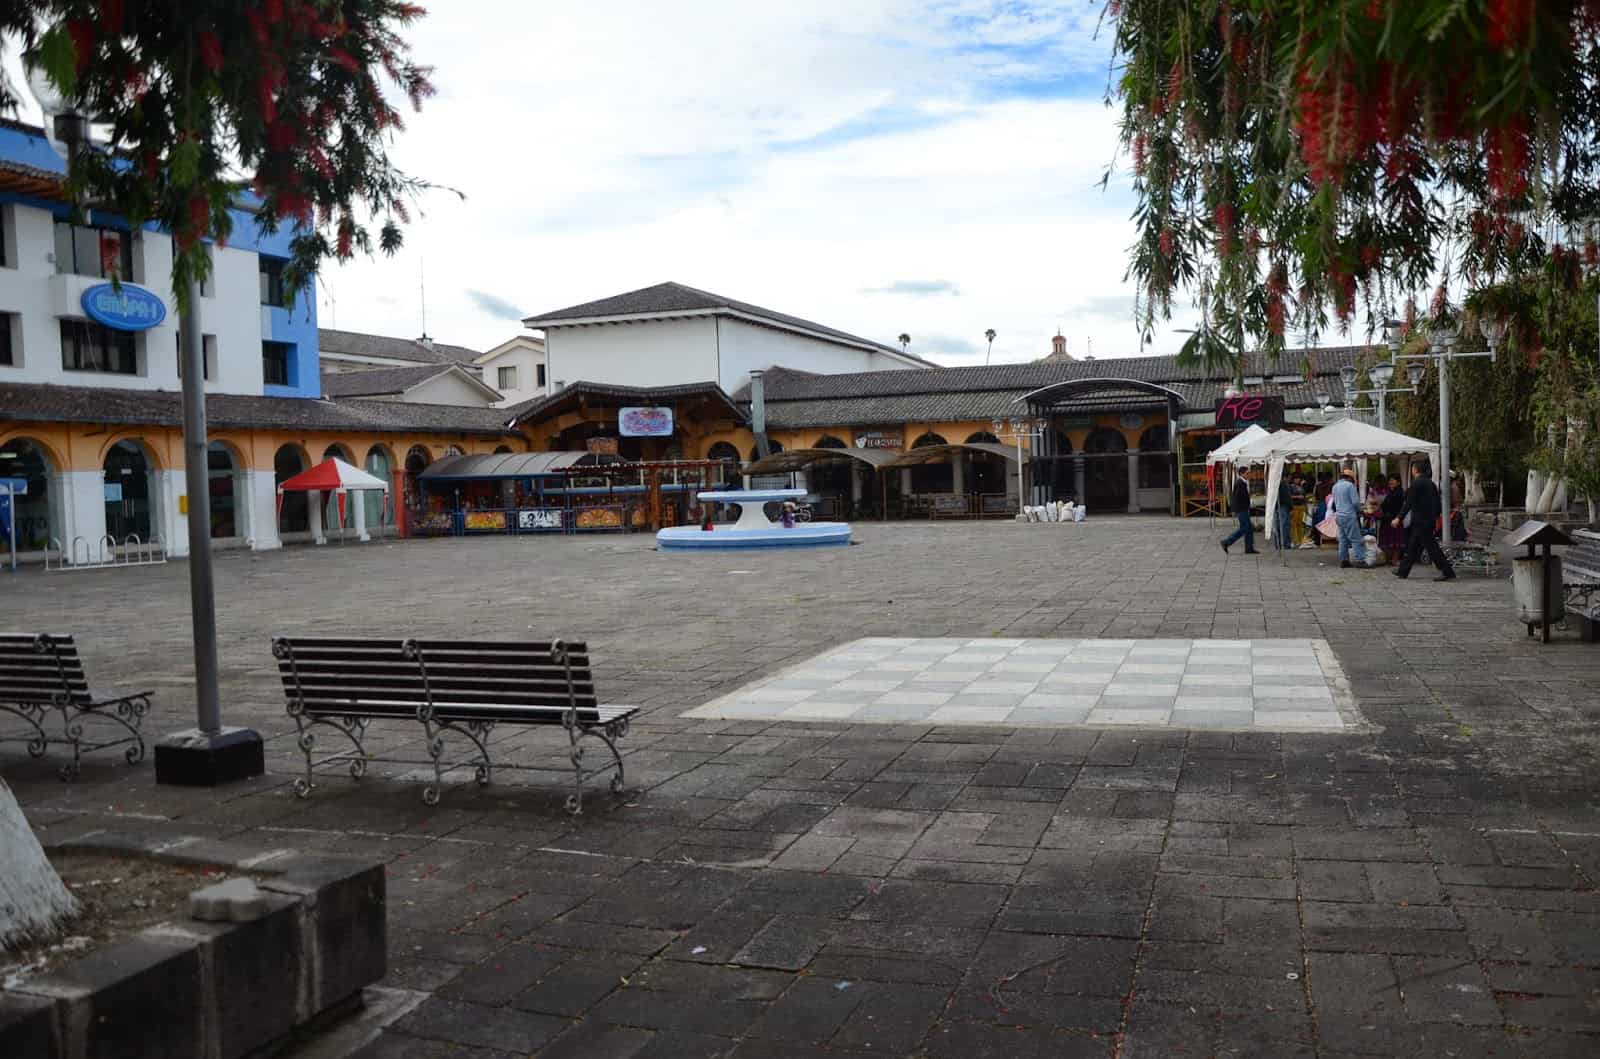 Plaza Francisco Calderón in Ibarra, Ecuador